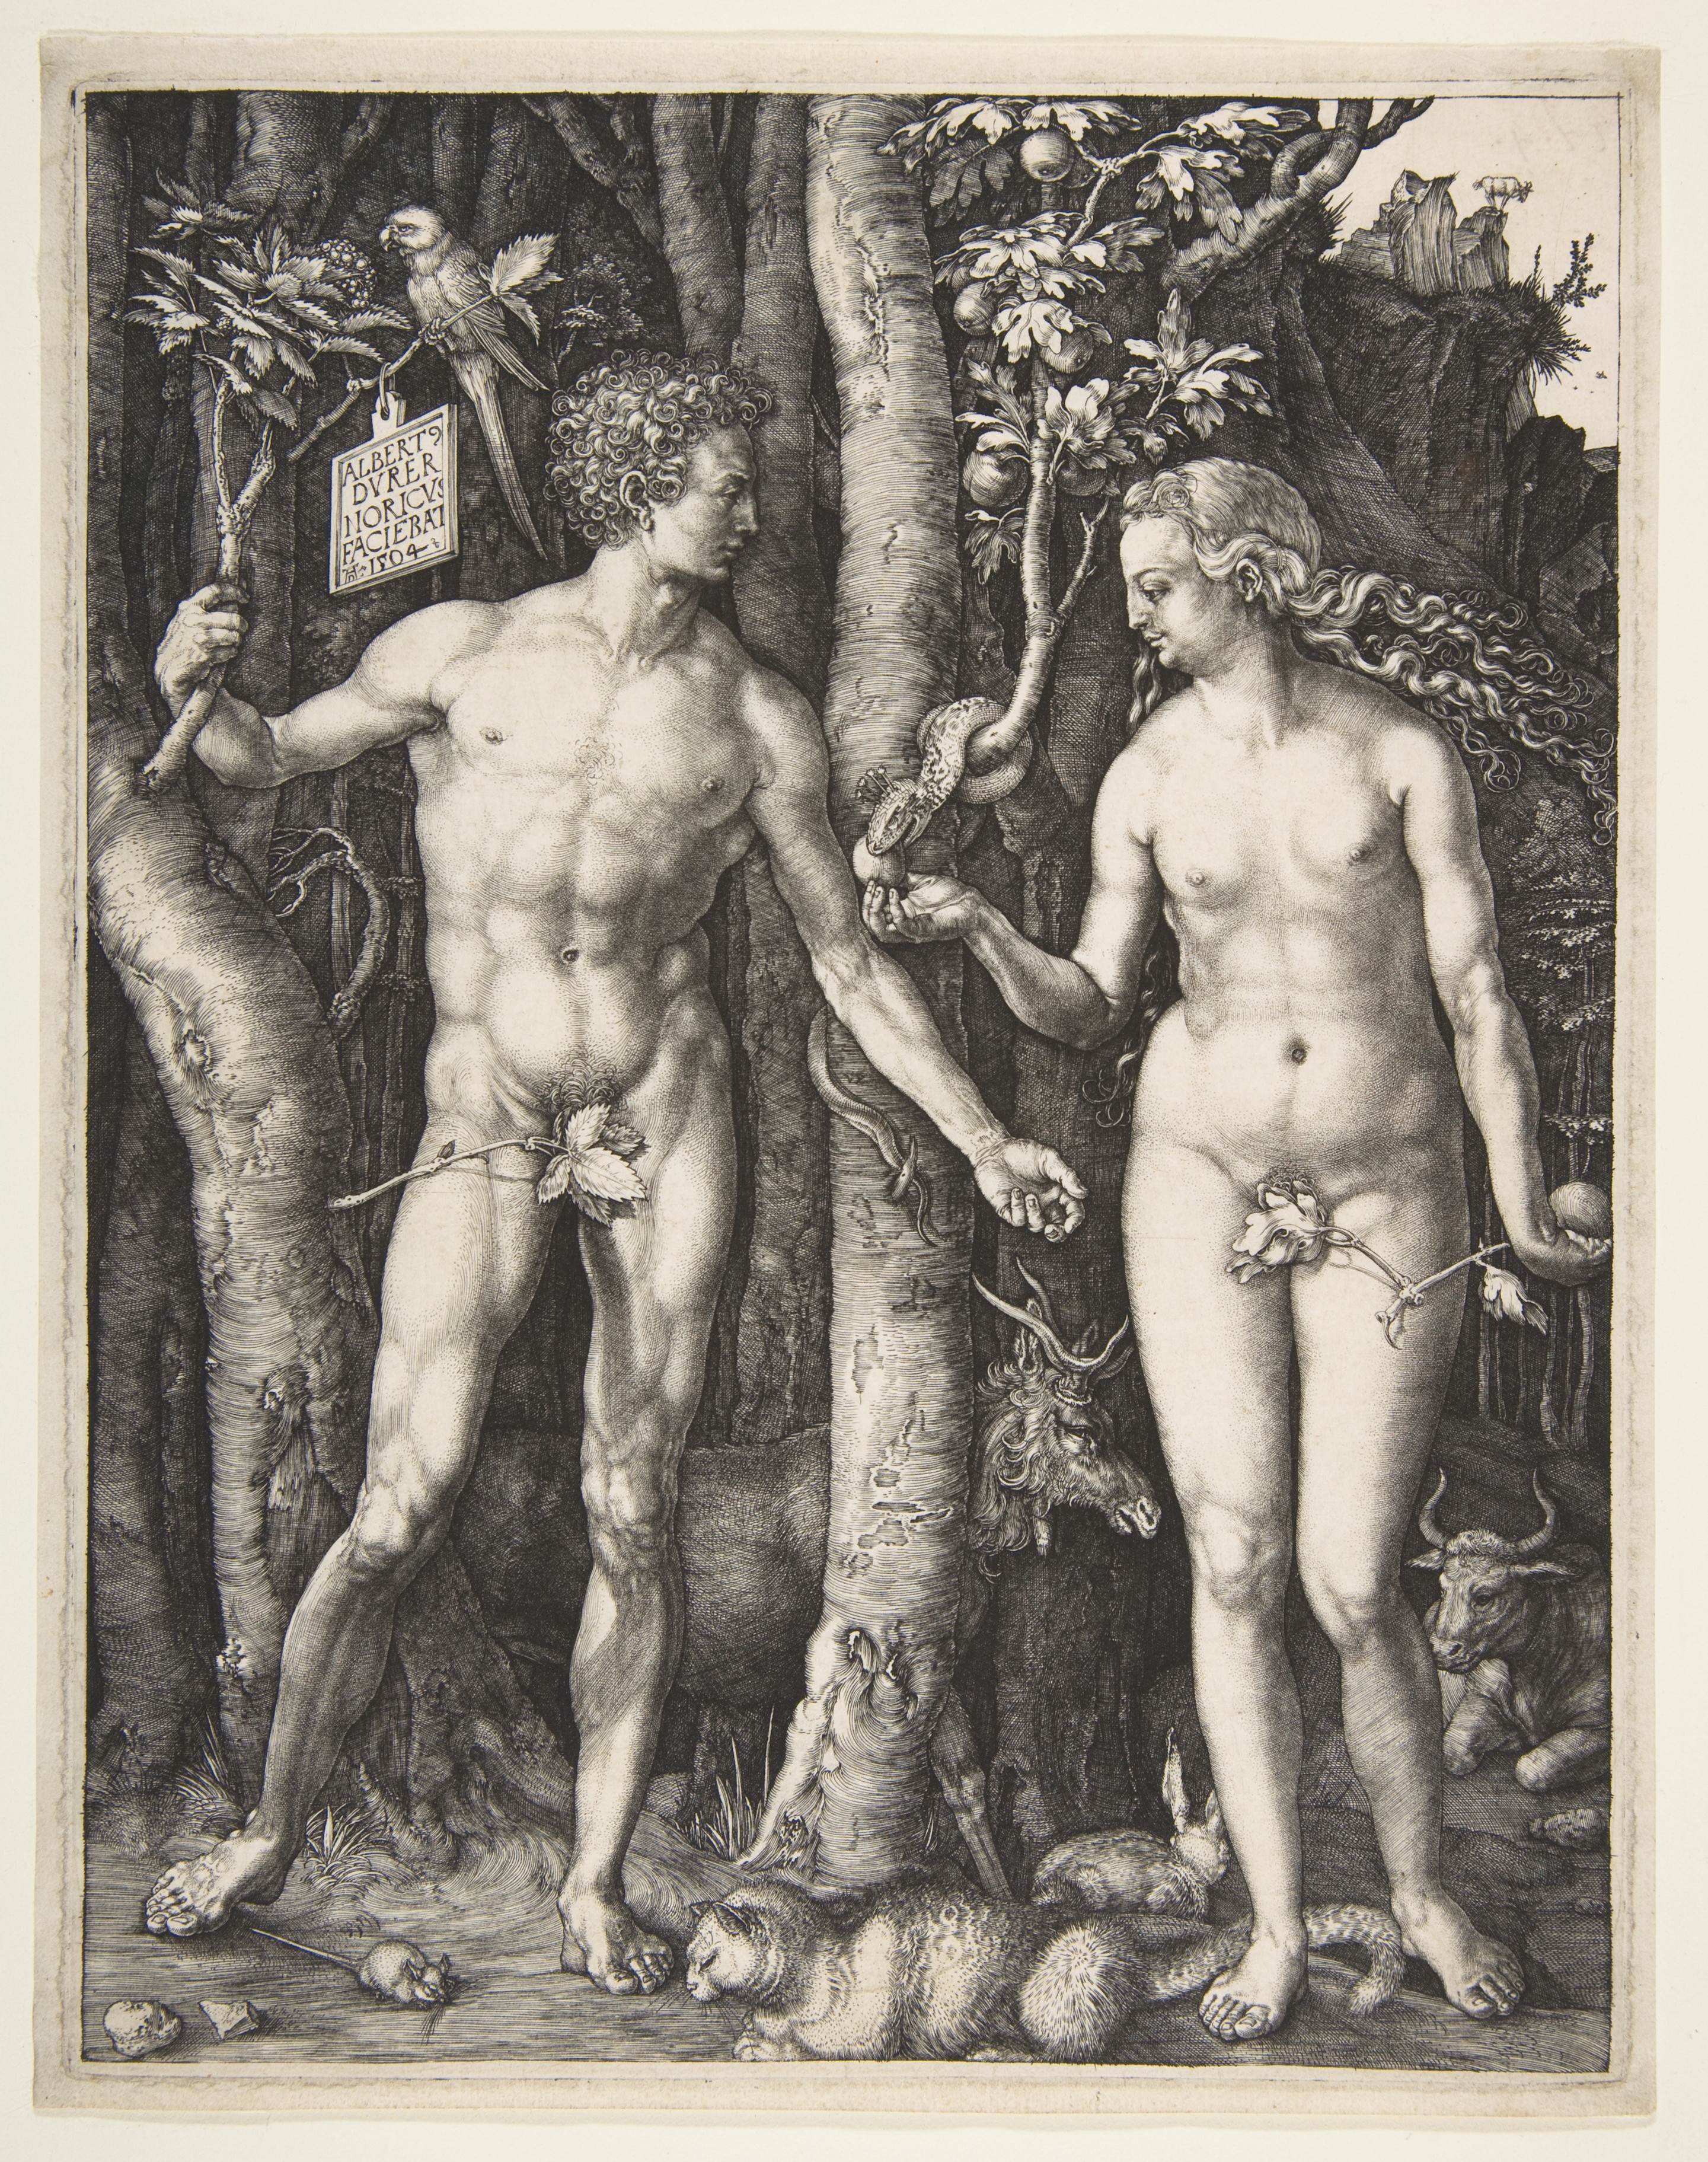 <p><strong>Adam and Eve</strong></p><p>Albrecht <span>Dürer</span></p><p><span>Northern Renaissance (Germany)</span></p><p><span>1504</span></p><p><span>Engraving</span></p>